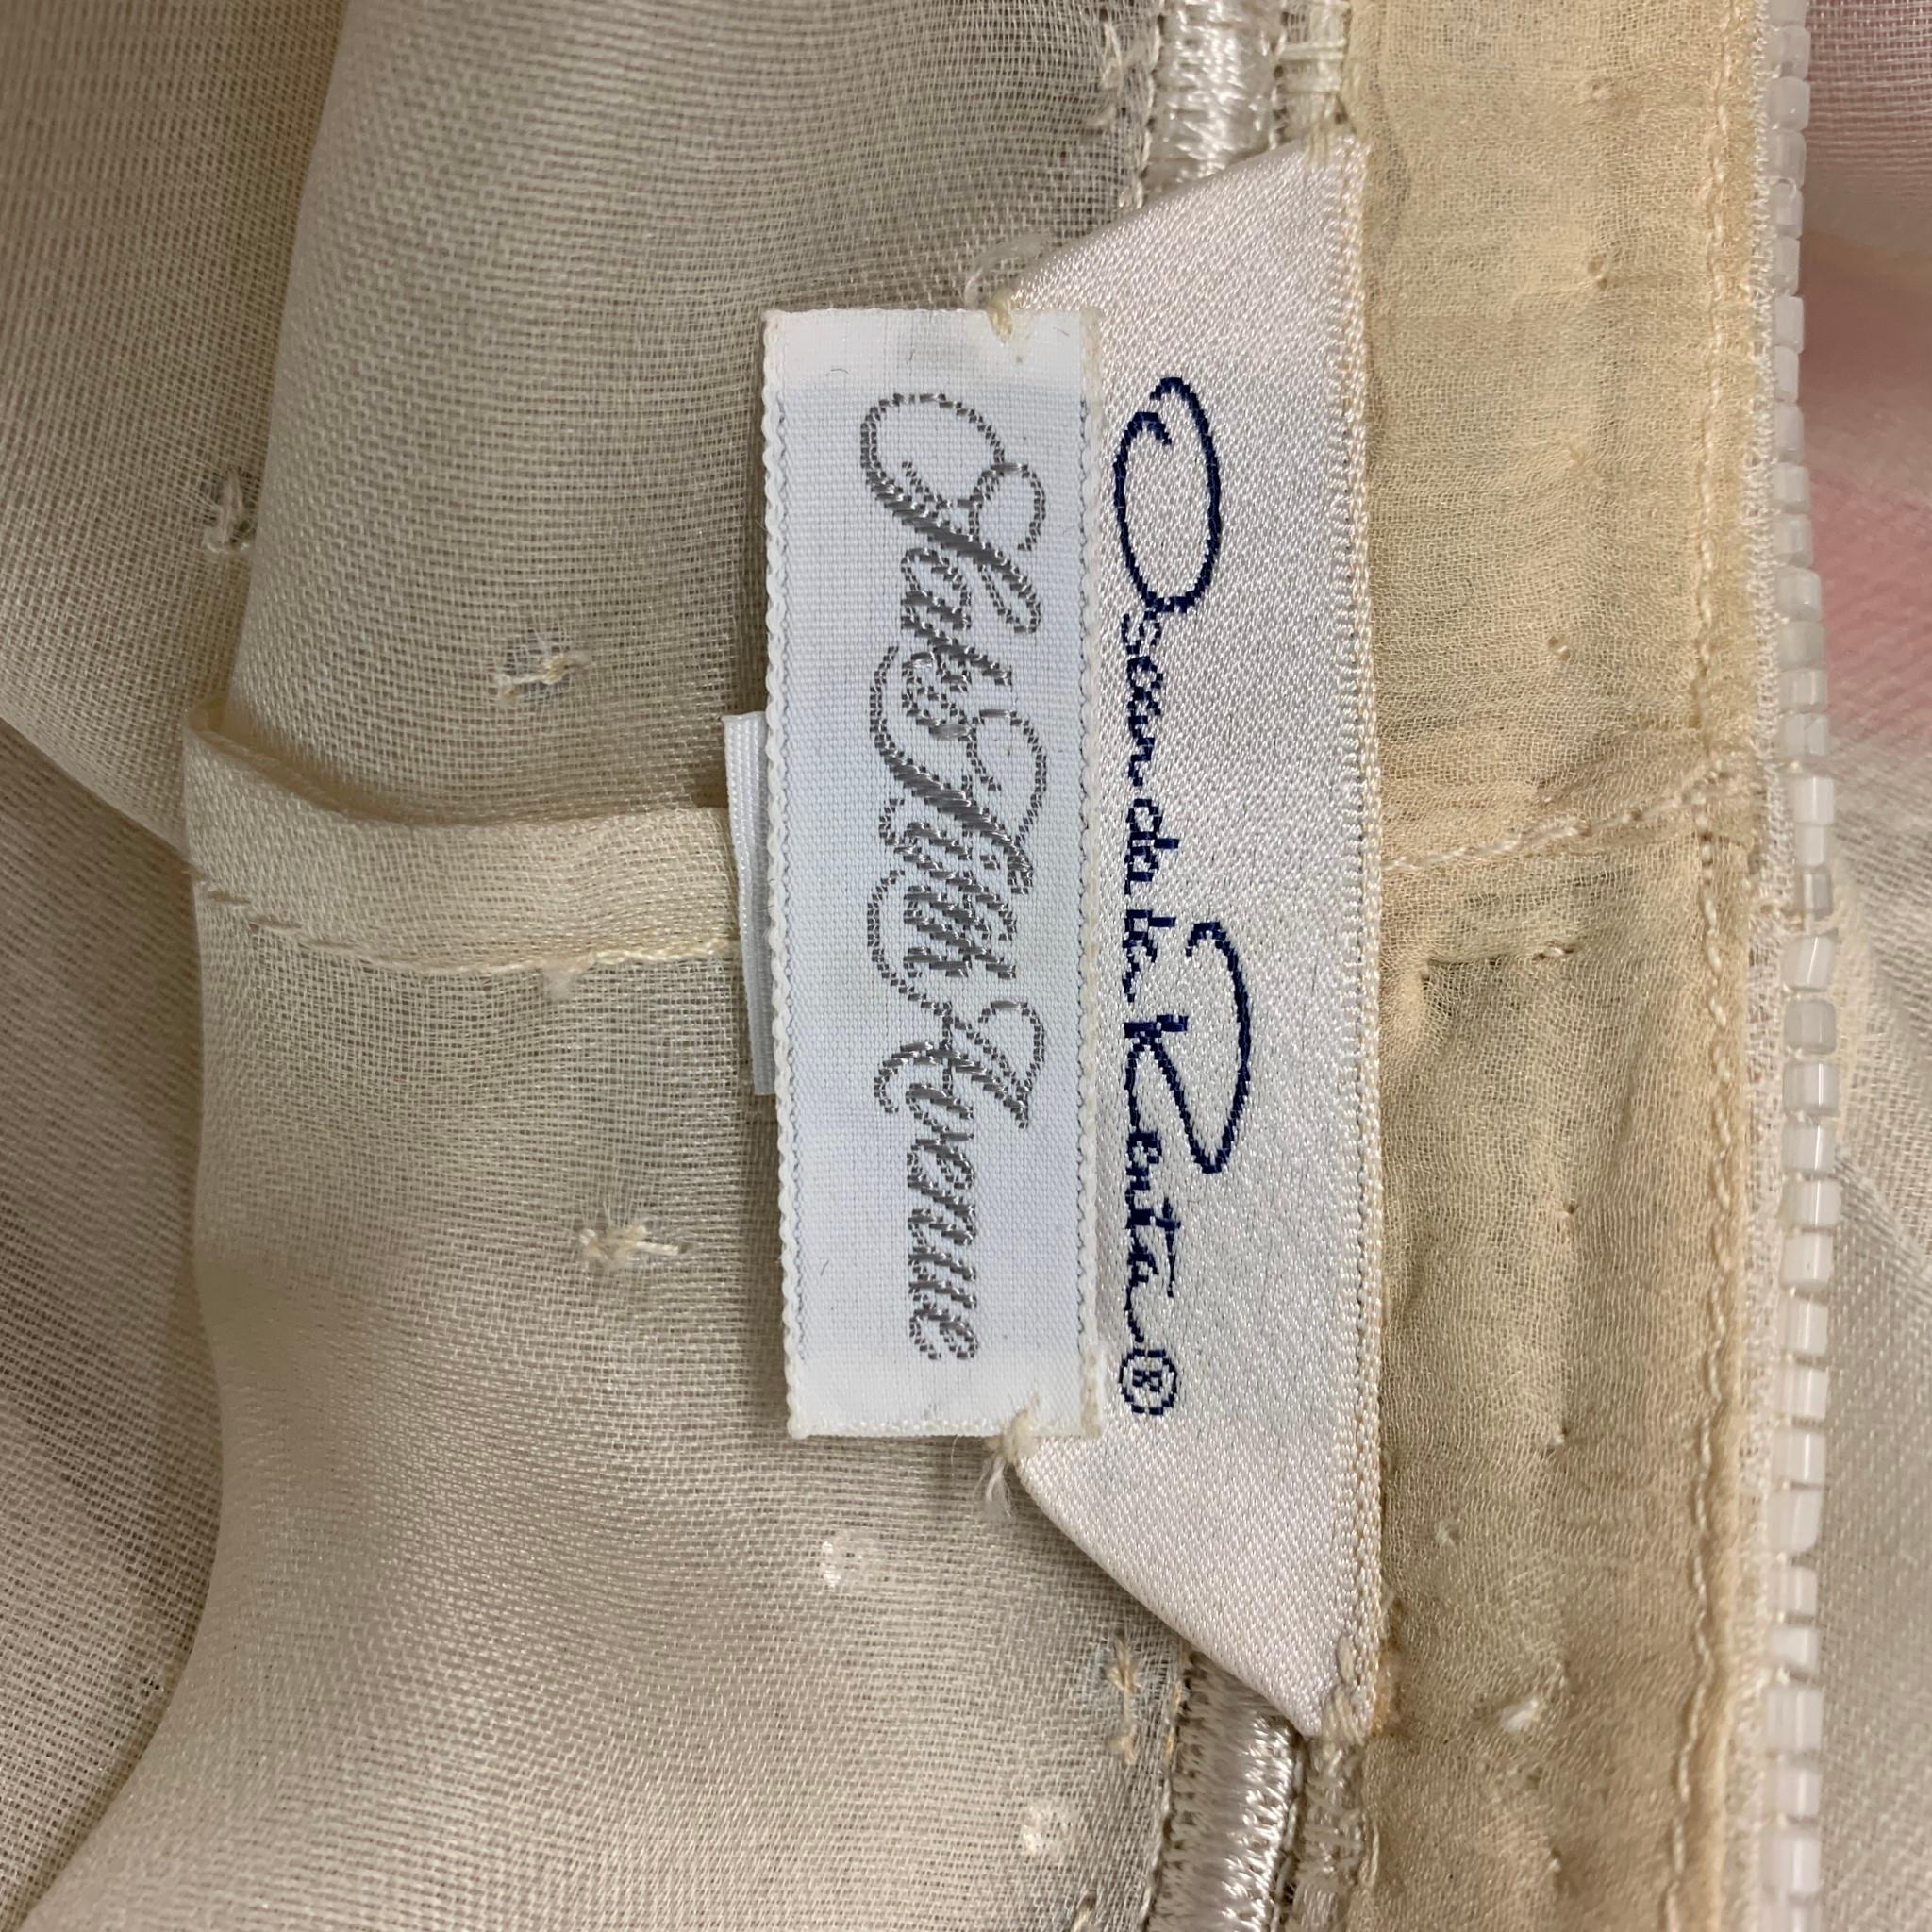 OSCAR DE LA RENTA Size M Cream Embroidered Tunic Dress Top 2